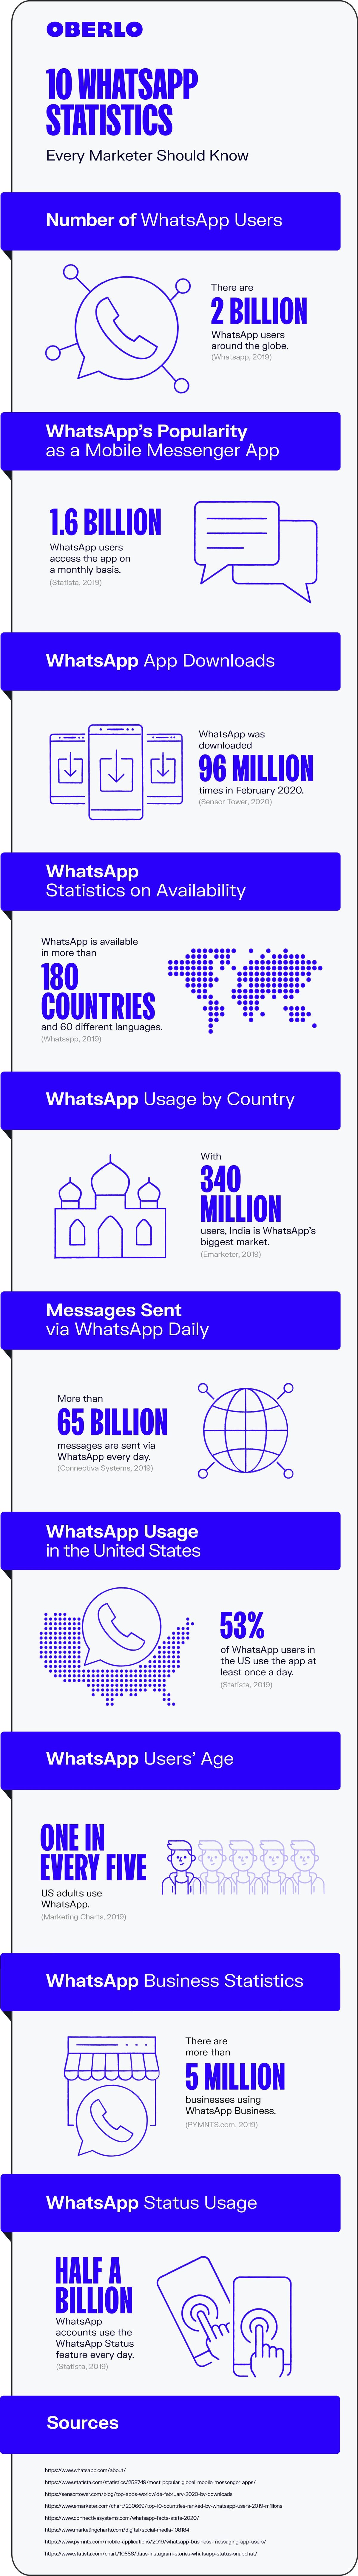 WhatsApp-statistik 2020